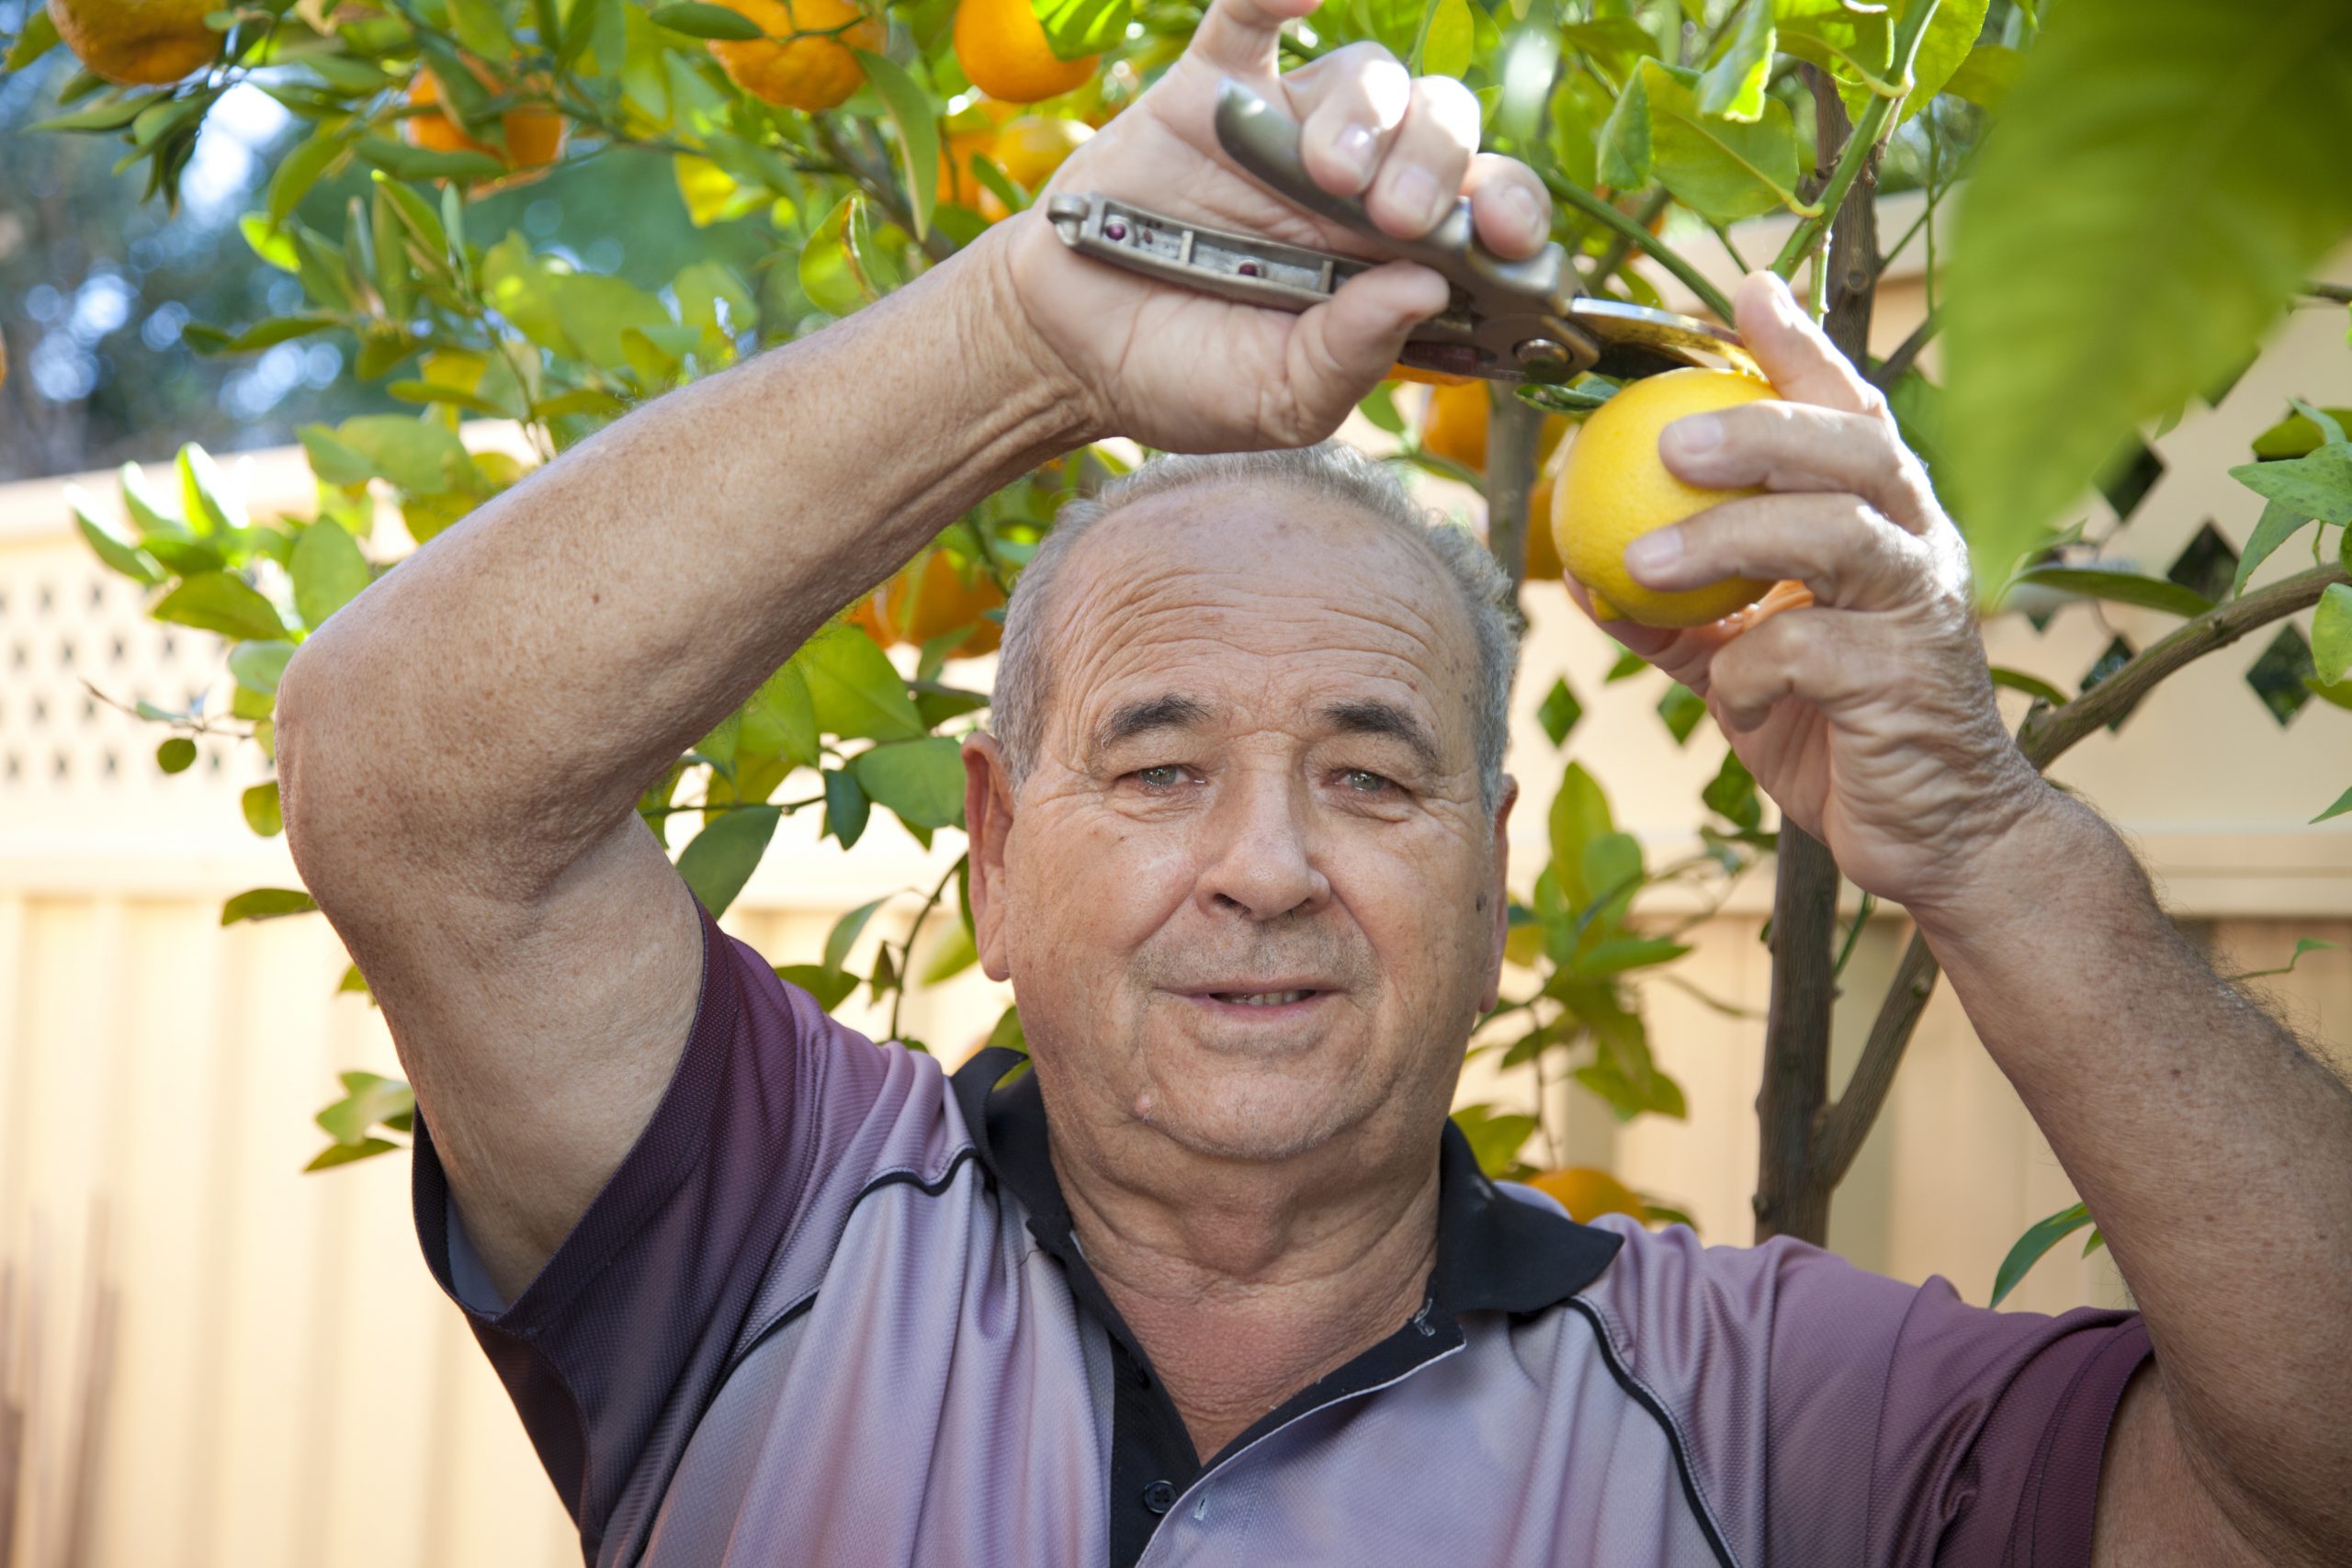 Older man cutting lemons from tree